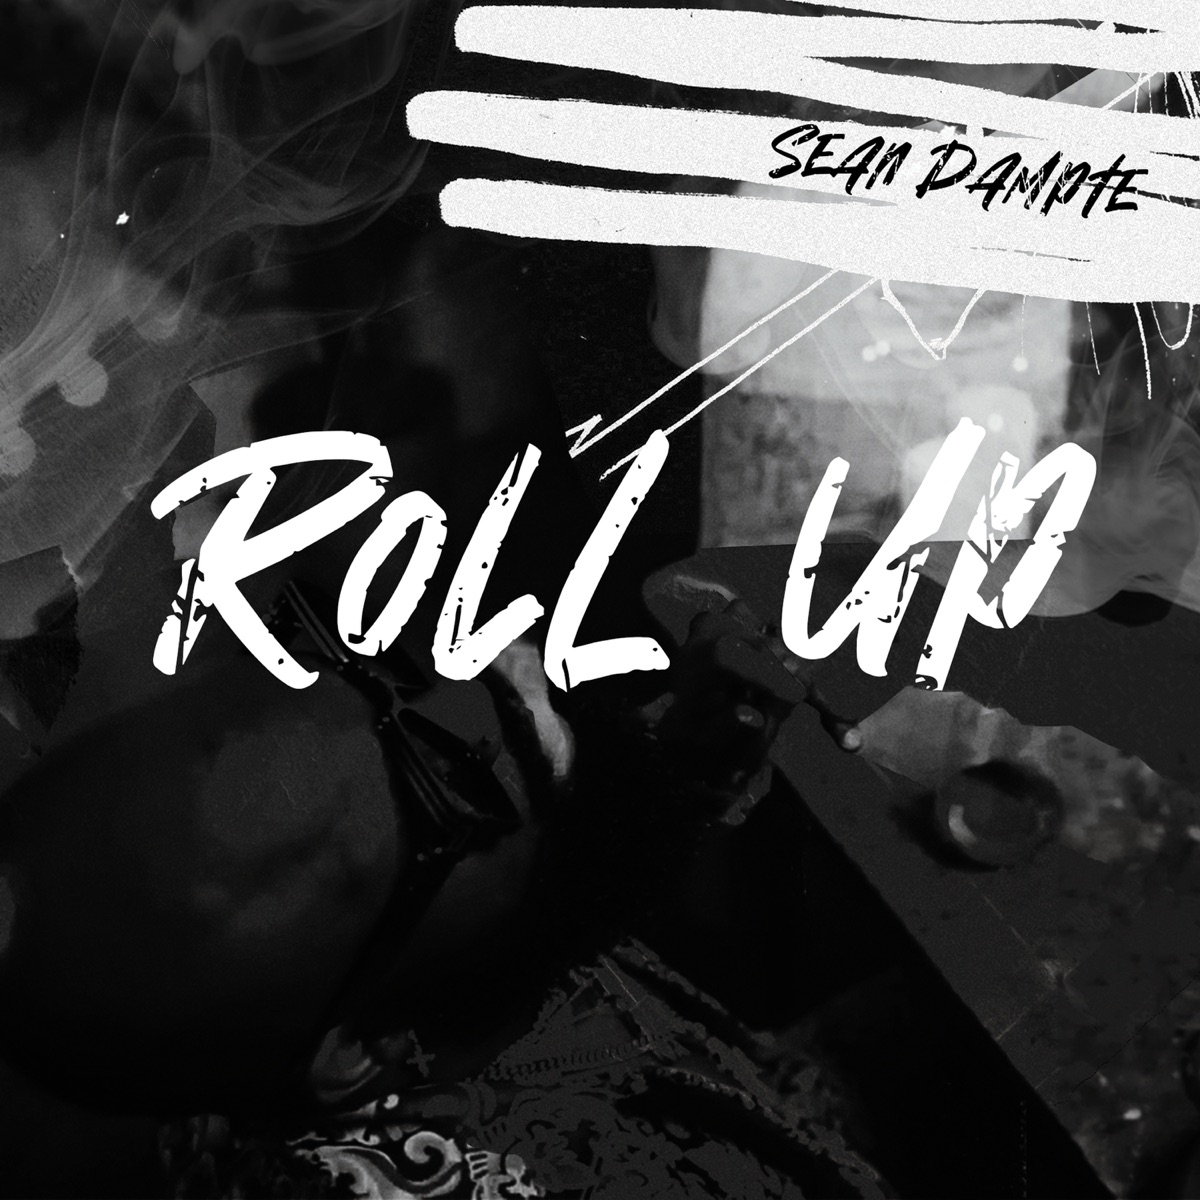 #NP 'Roll Up' @SeanDampte 

#FreshMusicBox // @geeyute 

#TuesdayFeeling 
#GoodMusicAlone 

#StayFresh cc @EpiphanicNg